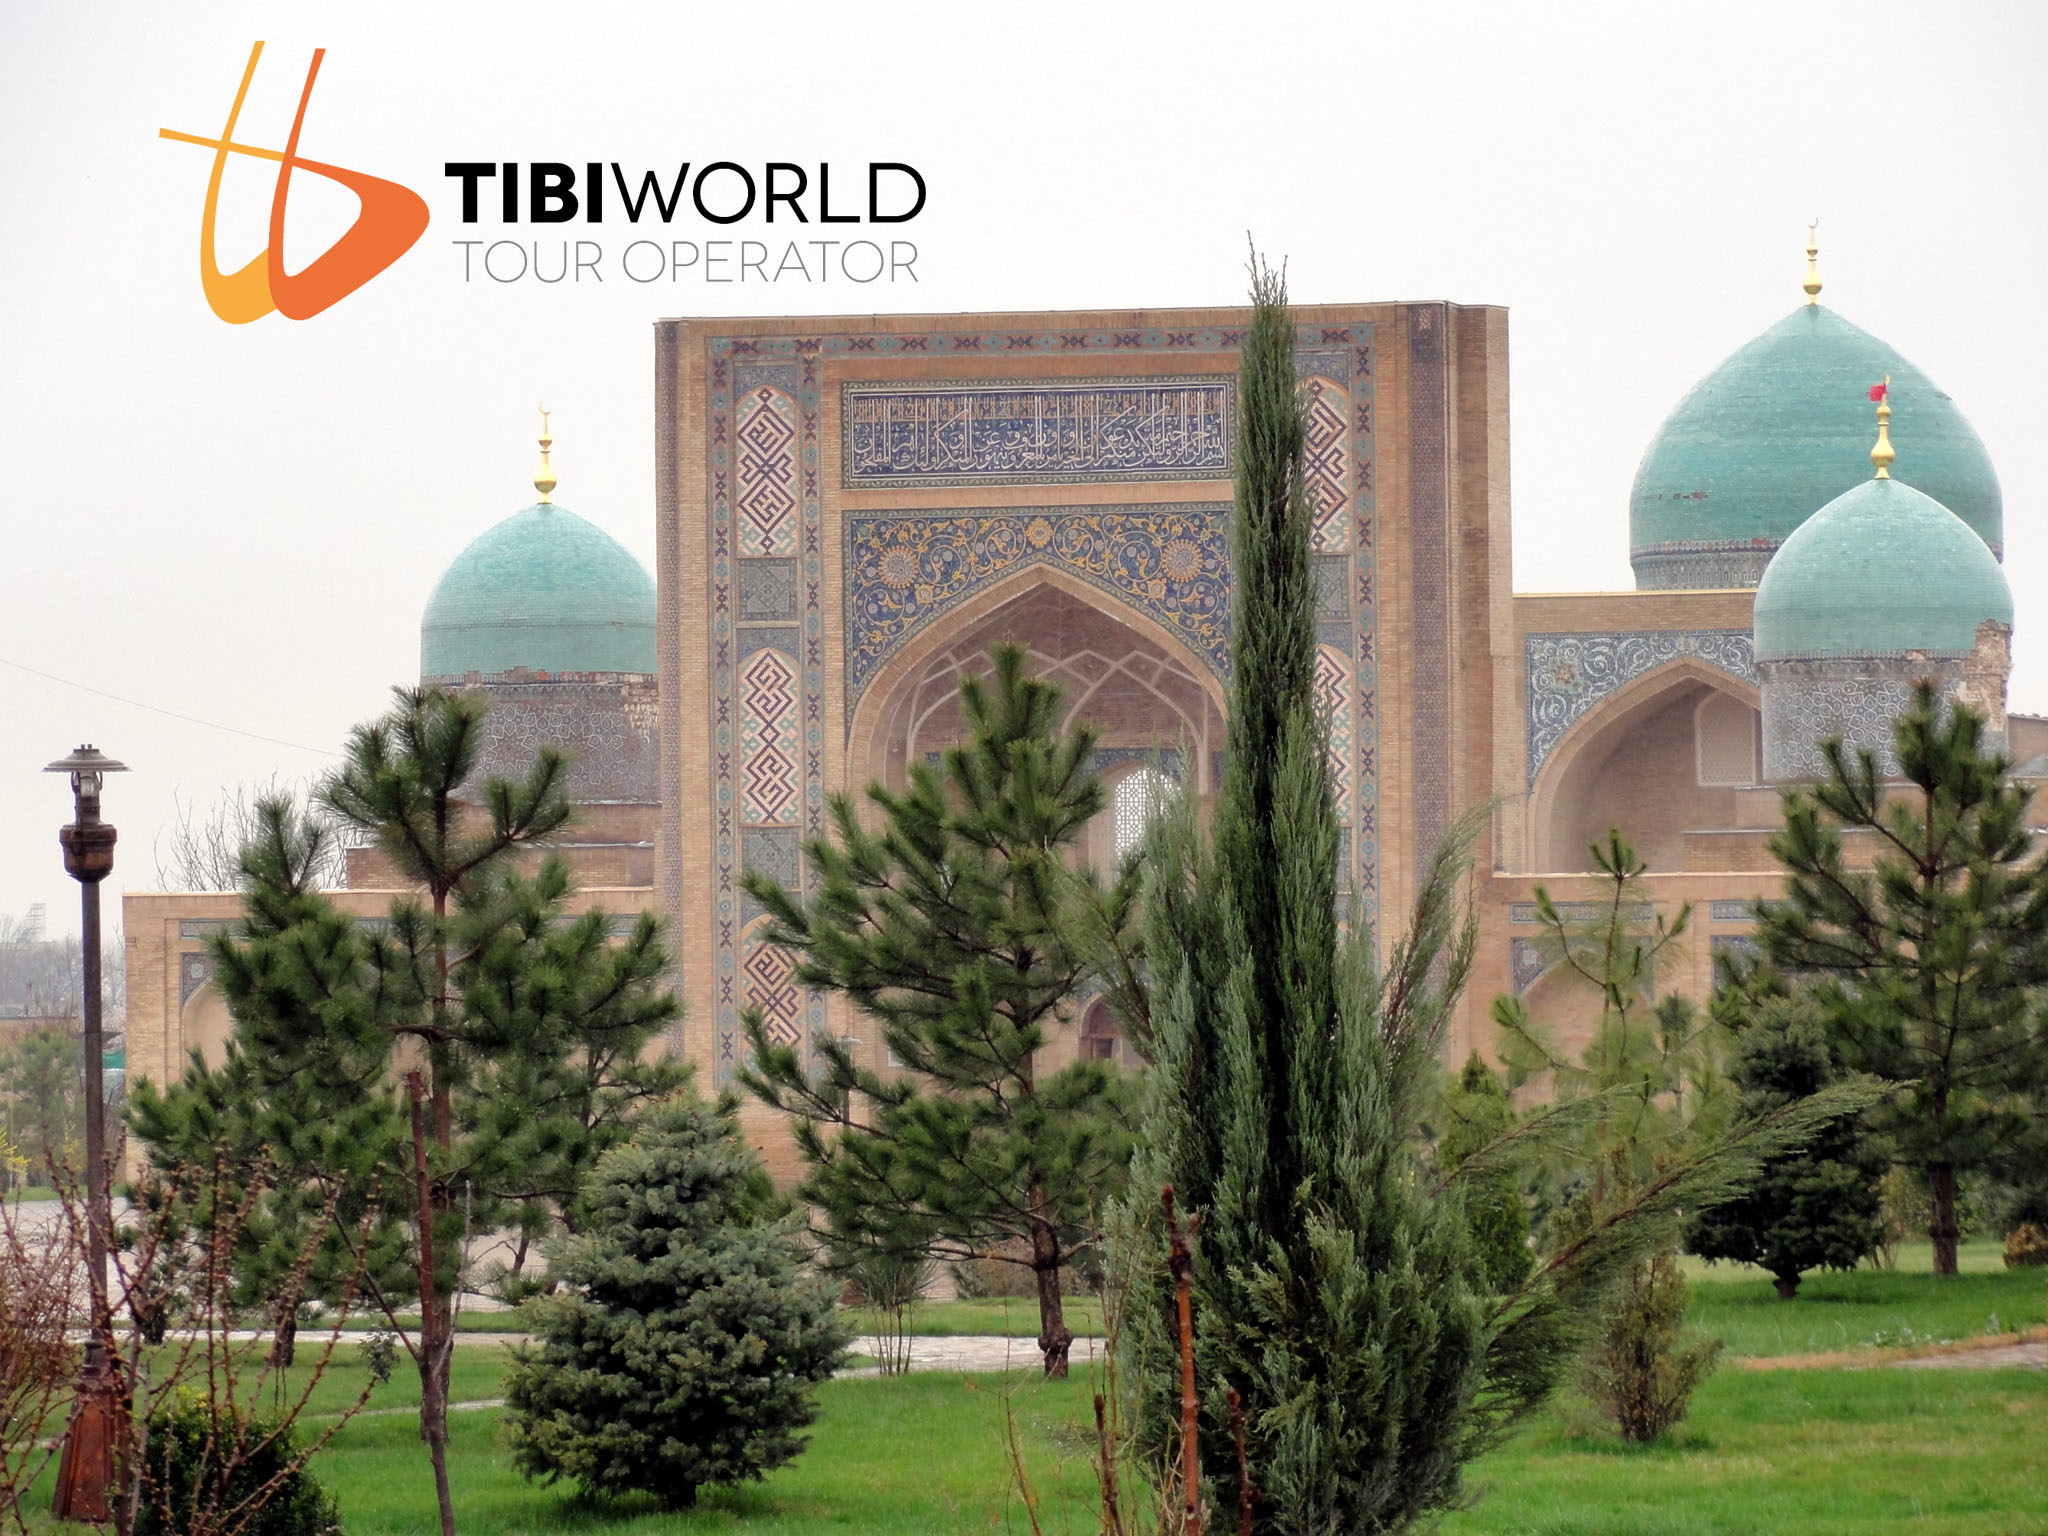 Tashkent - parte storica della capitale